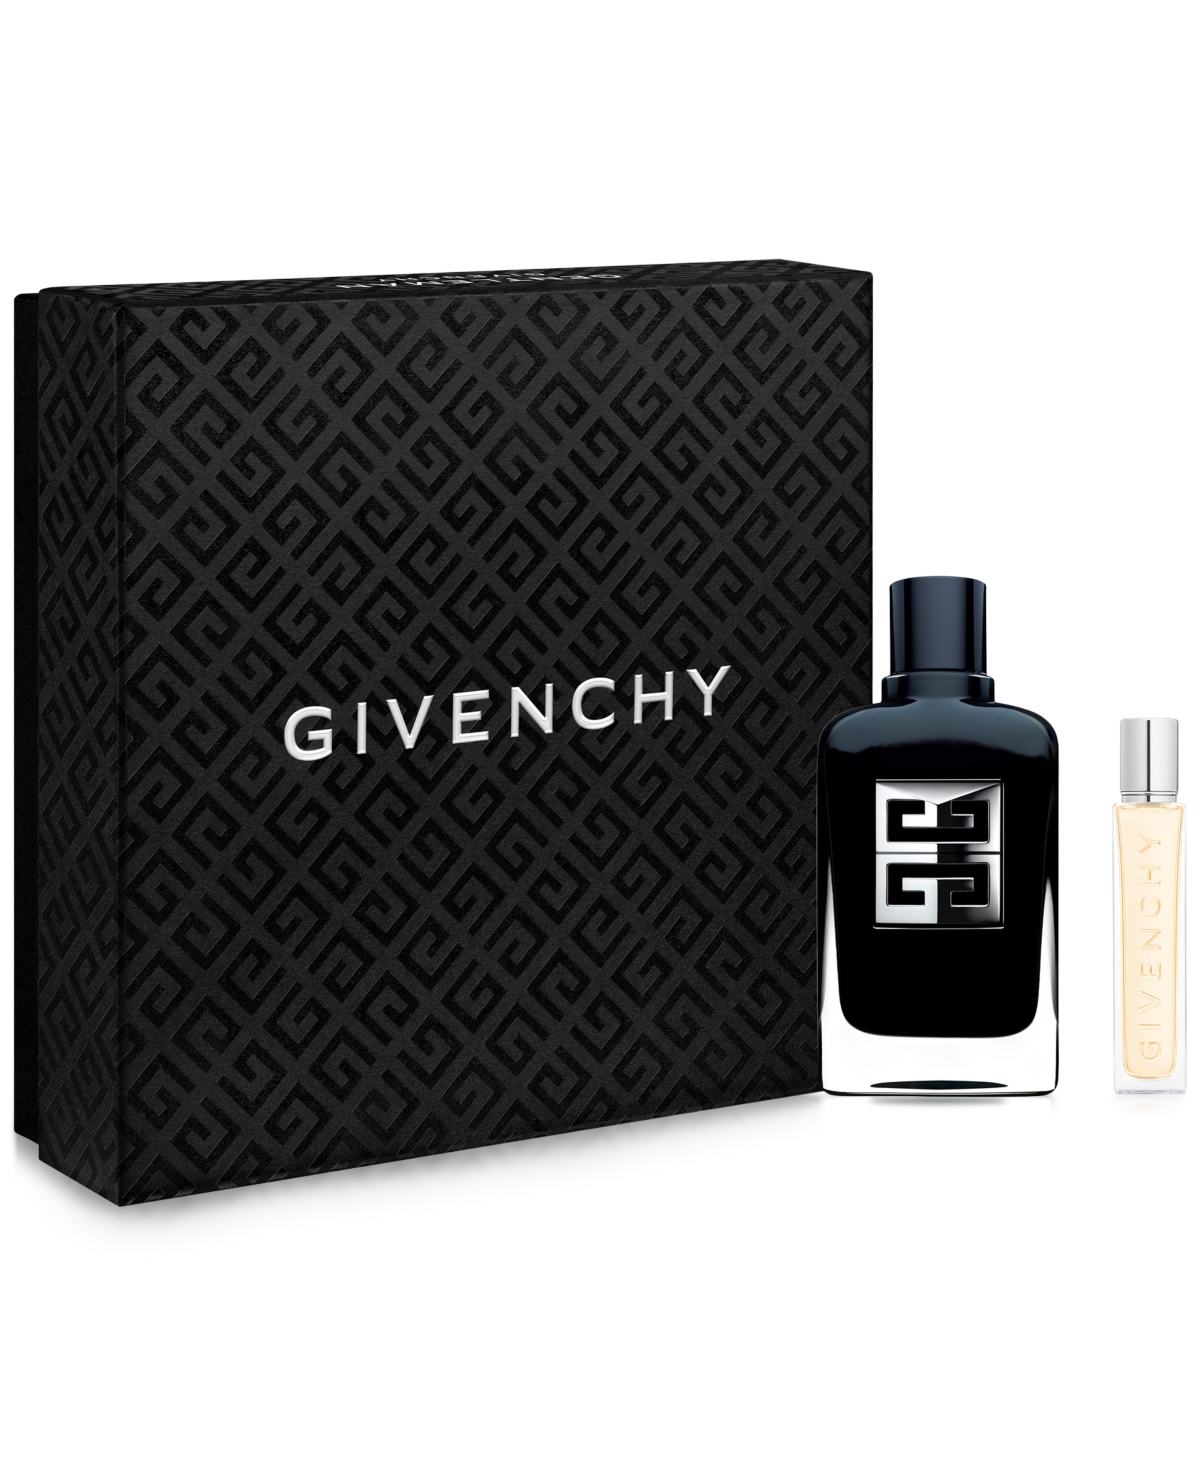 Men's 2-Pc. Gentleman Society Eau de Parfum Gift Set